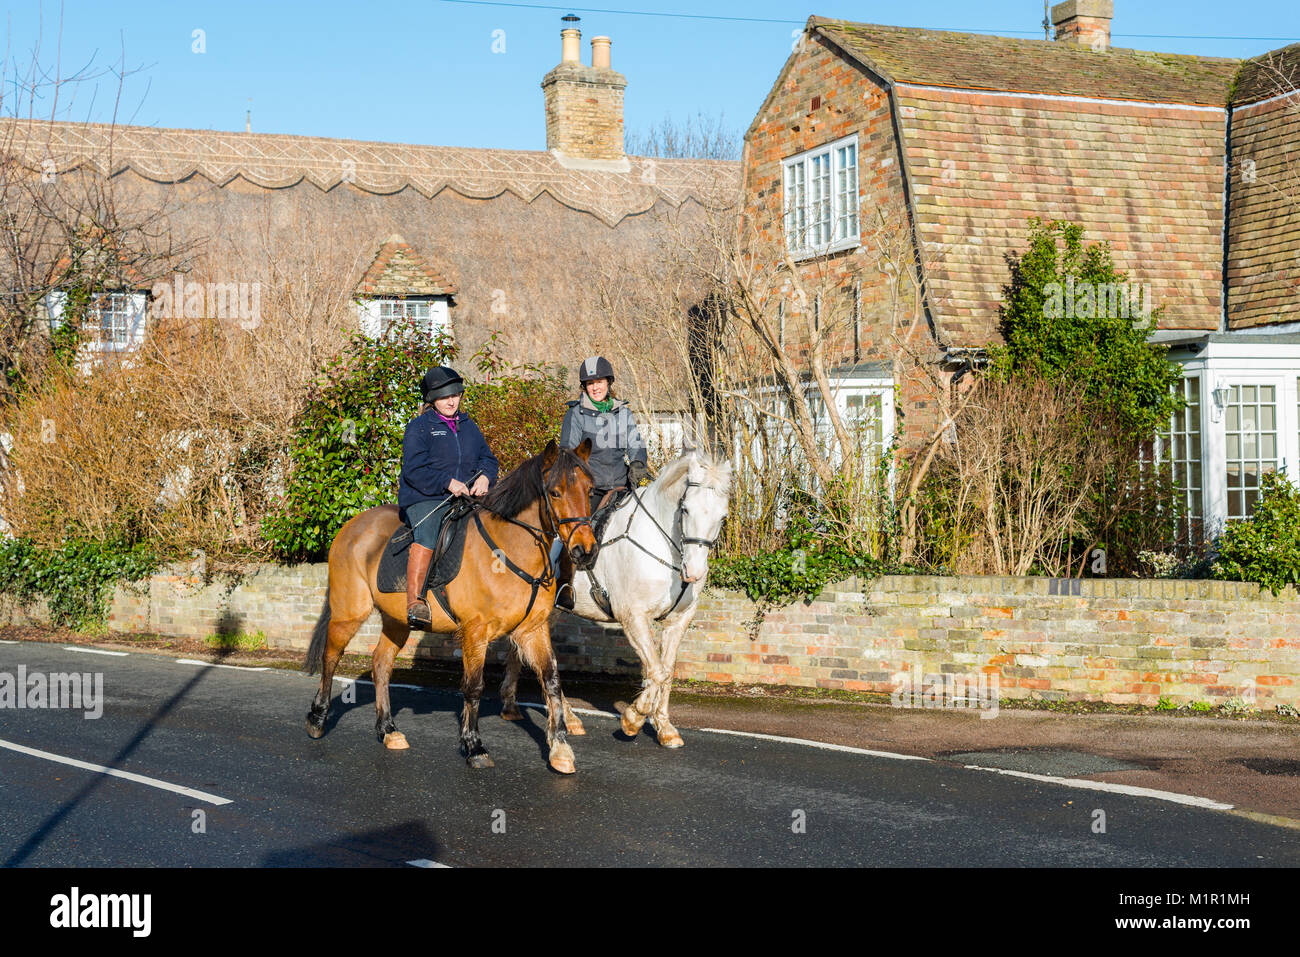 Country life at the pretty village of Hemingford Abbots, Cambridgeshire, England, UK. Stock Photo